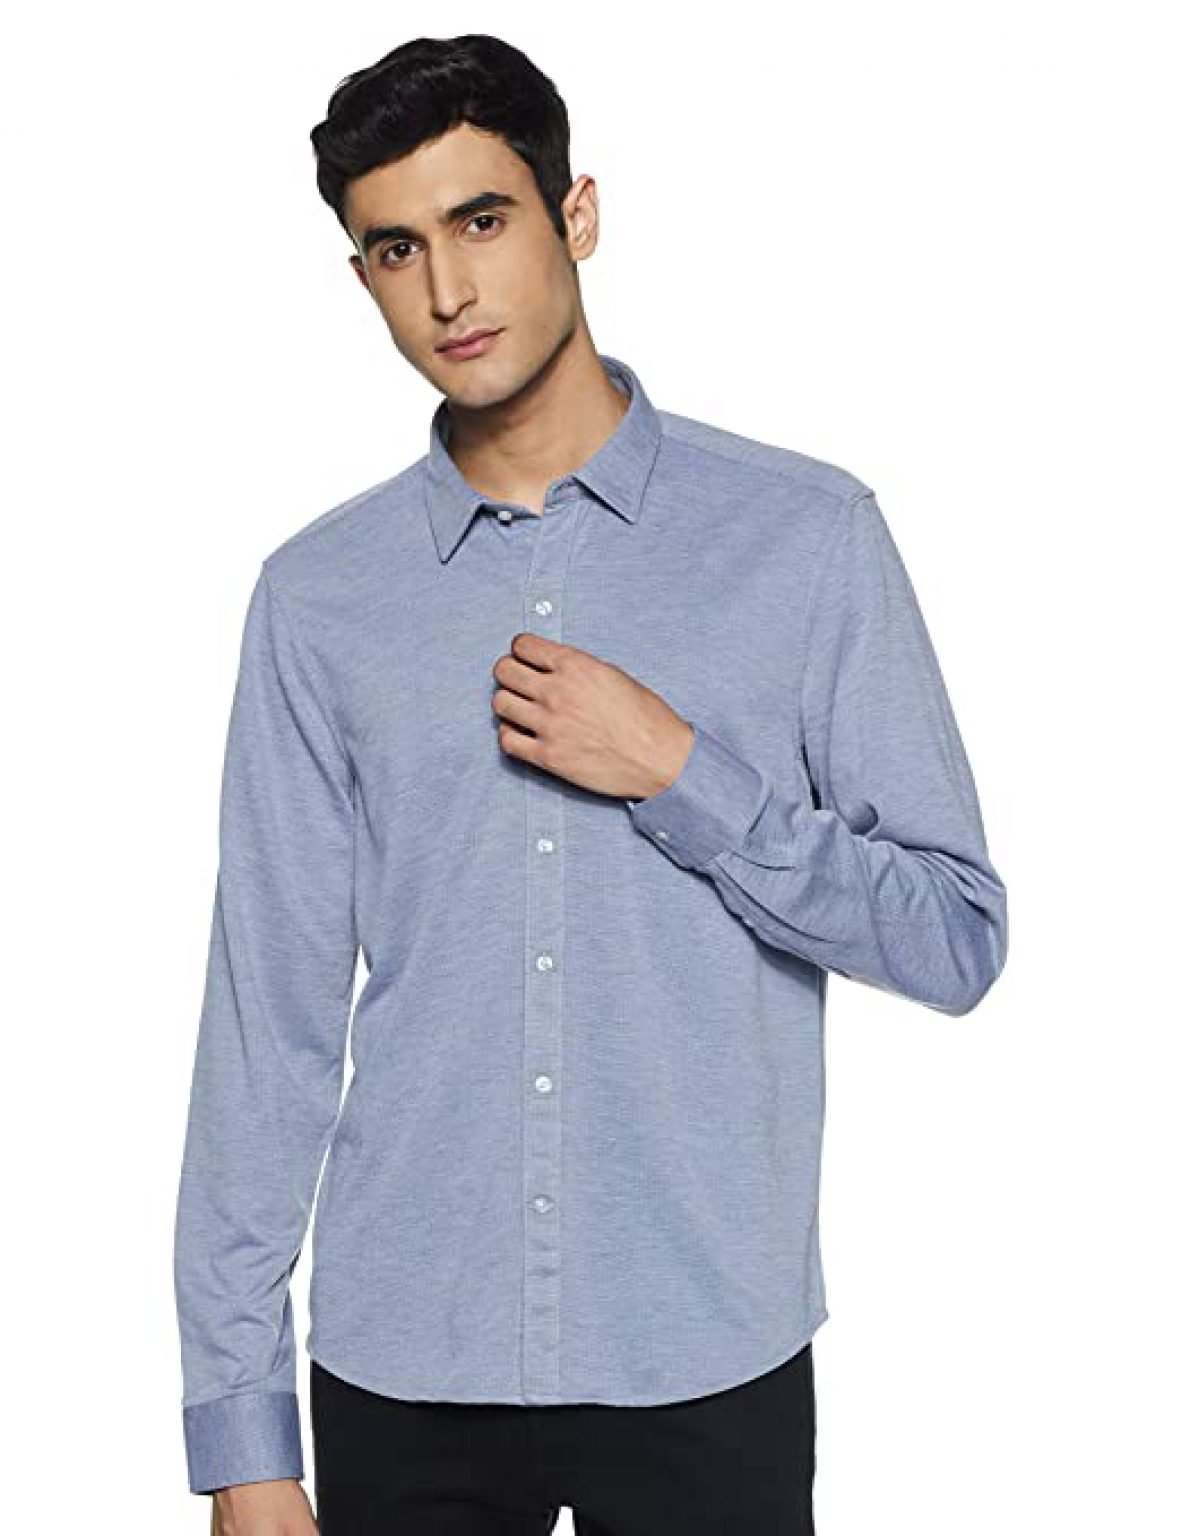 Best Shirt Brands For Men in India - GrabOn